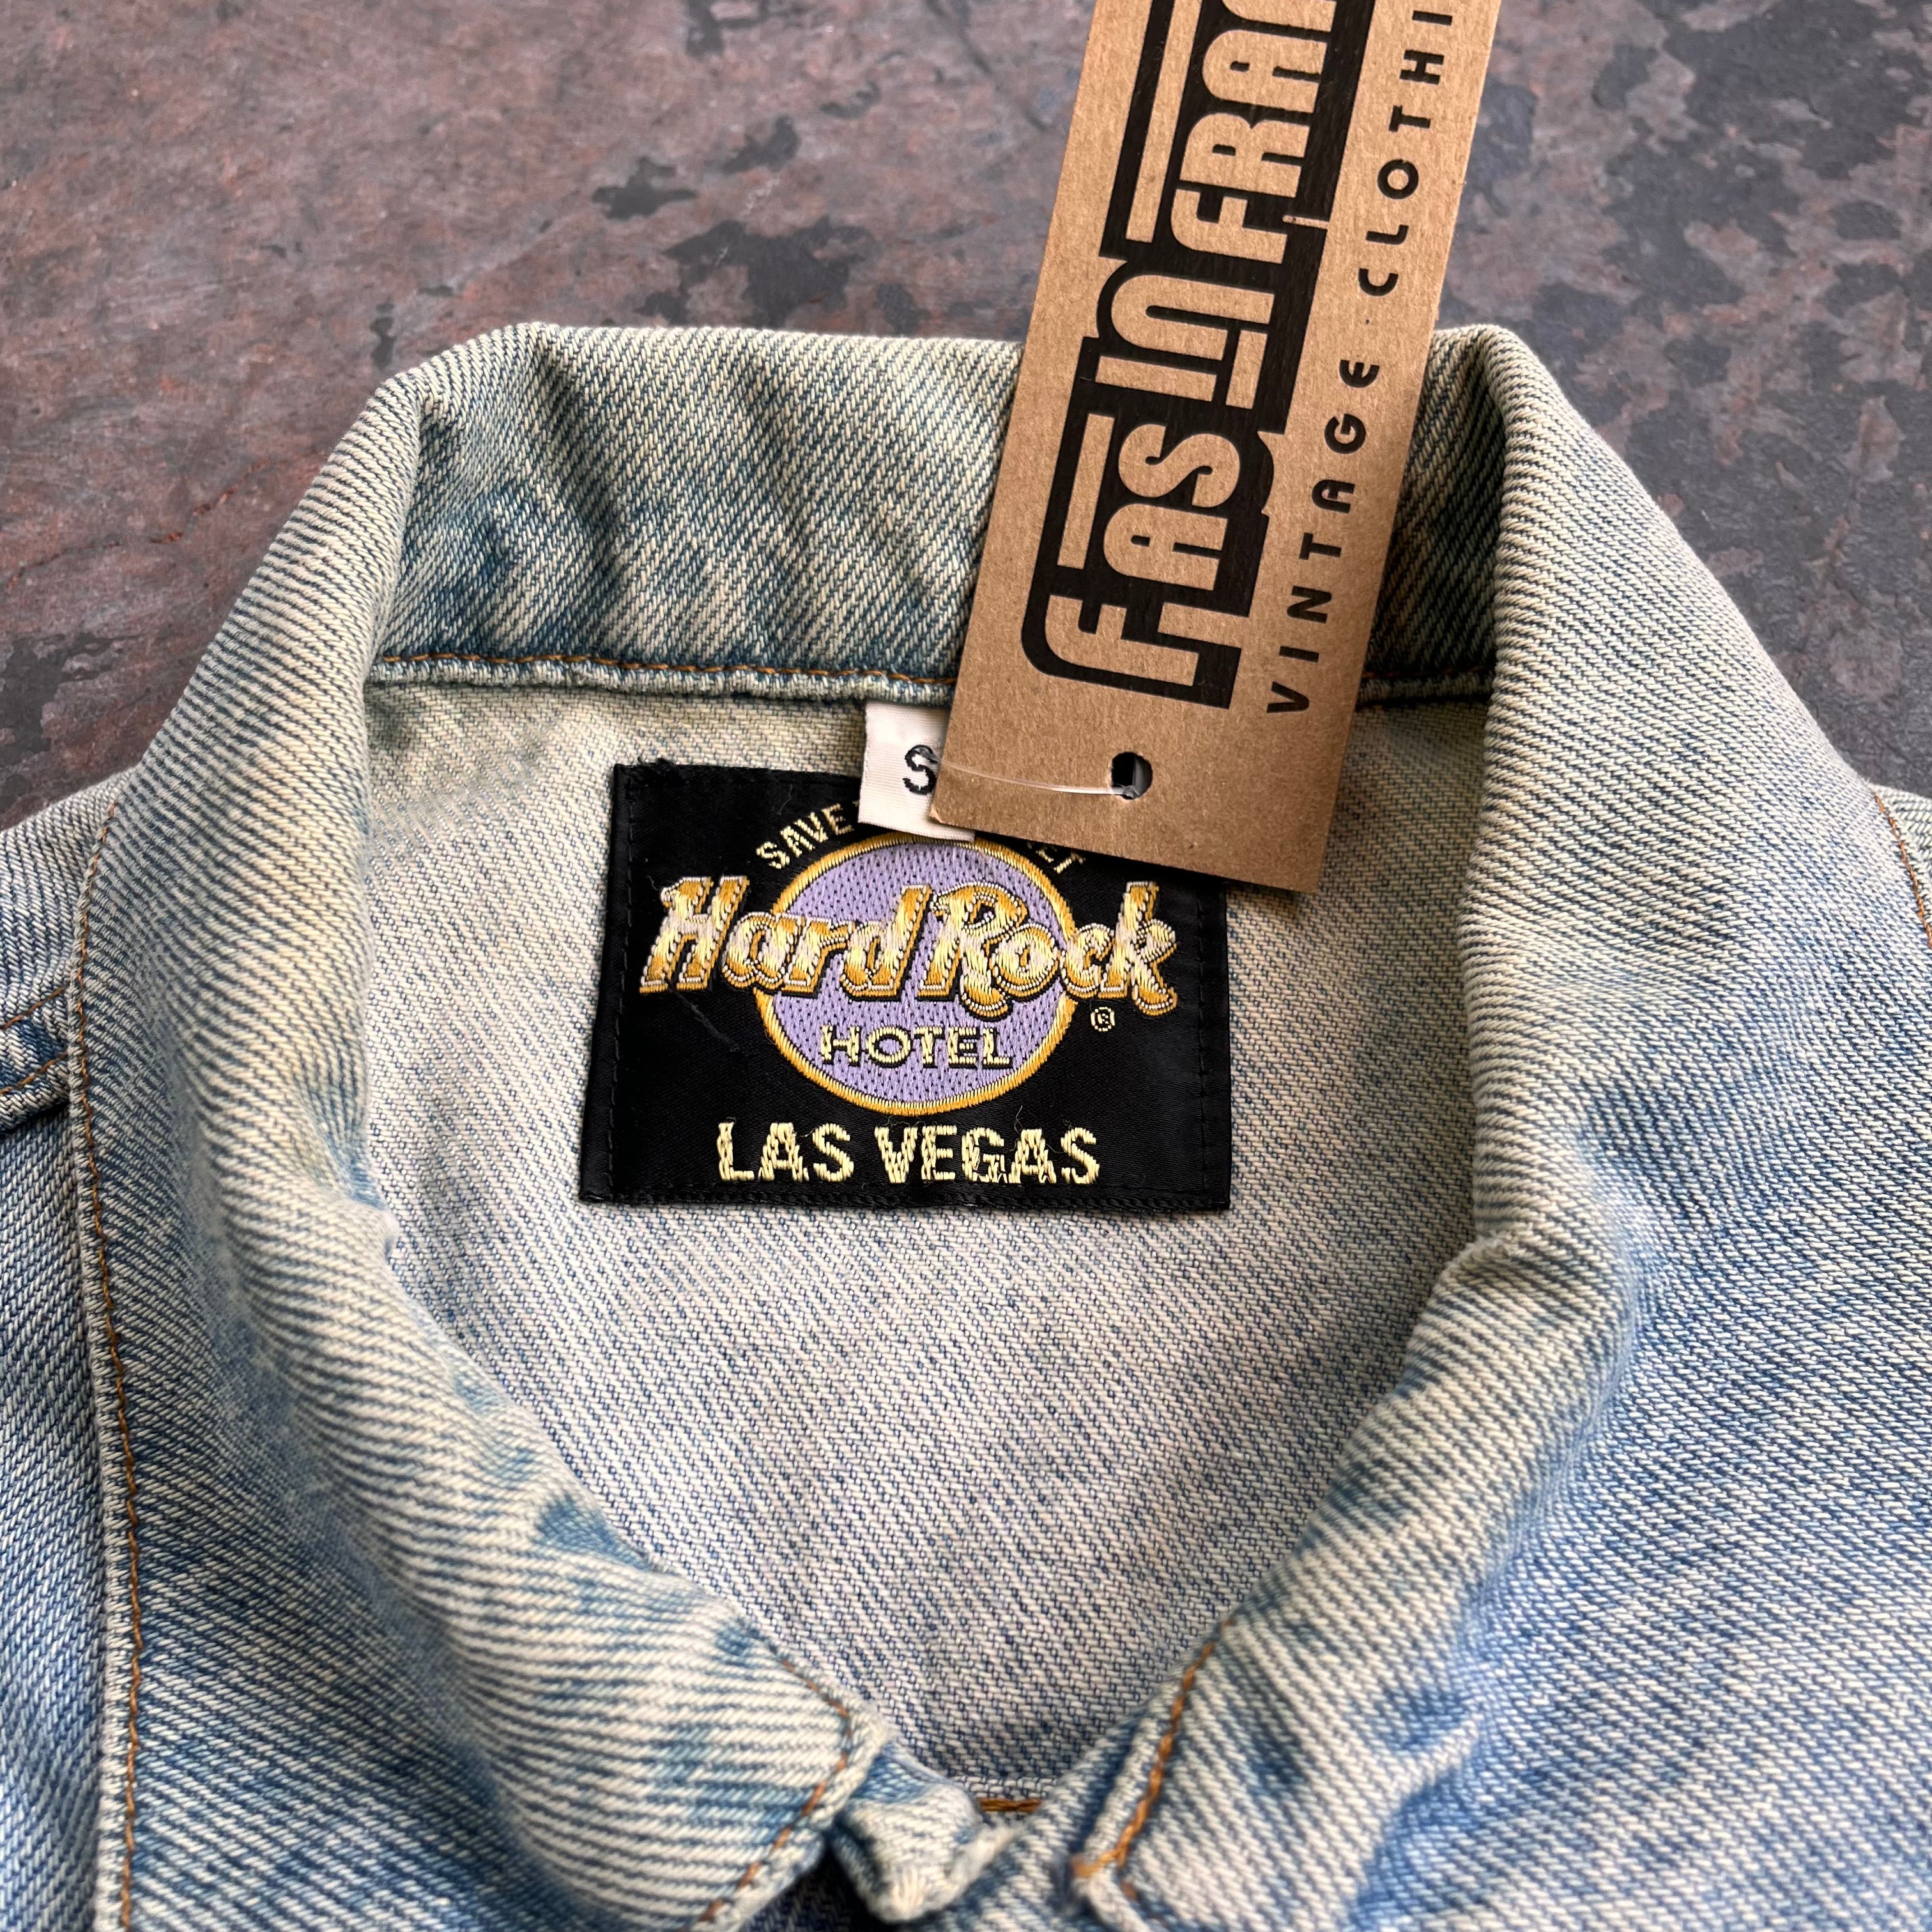 Hard Rock Hotel Denim Jacket